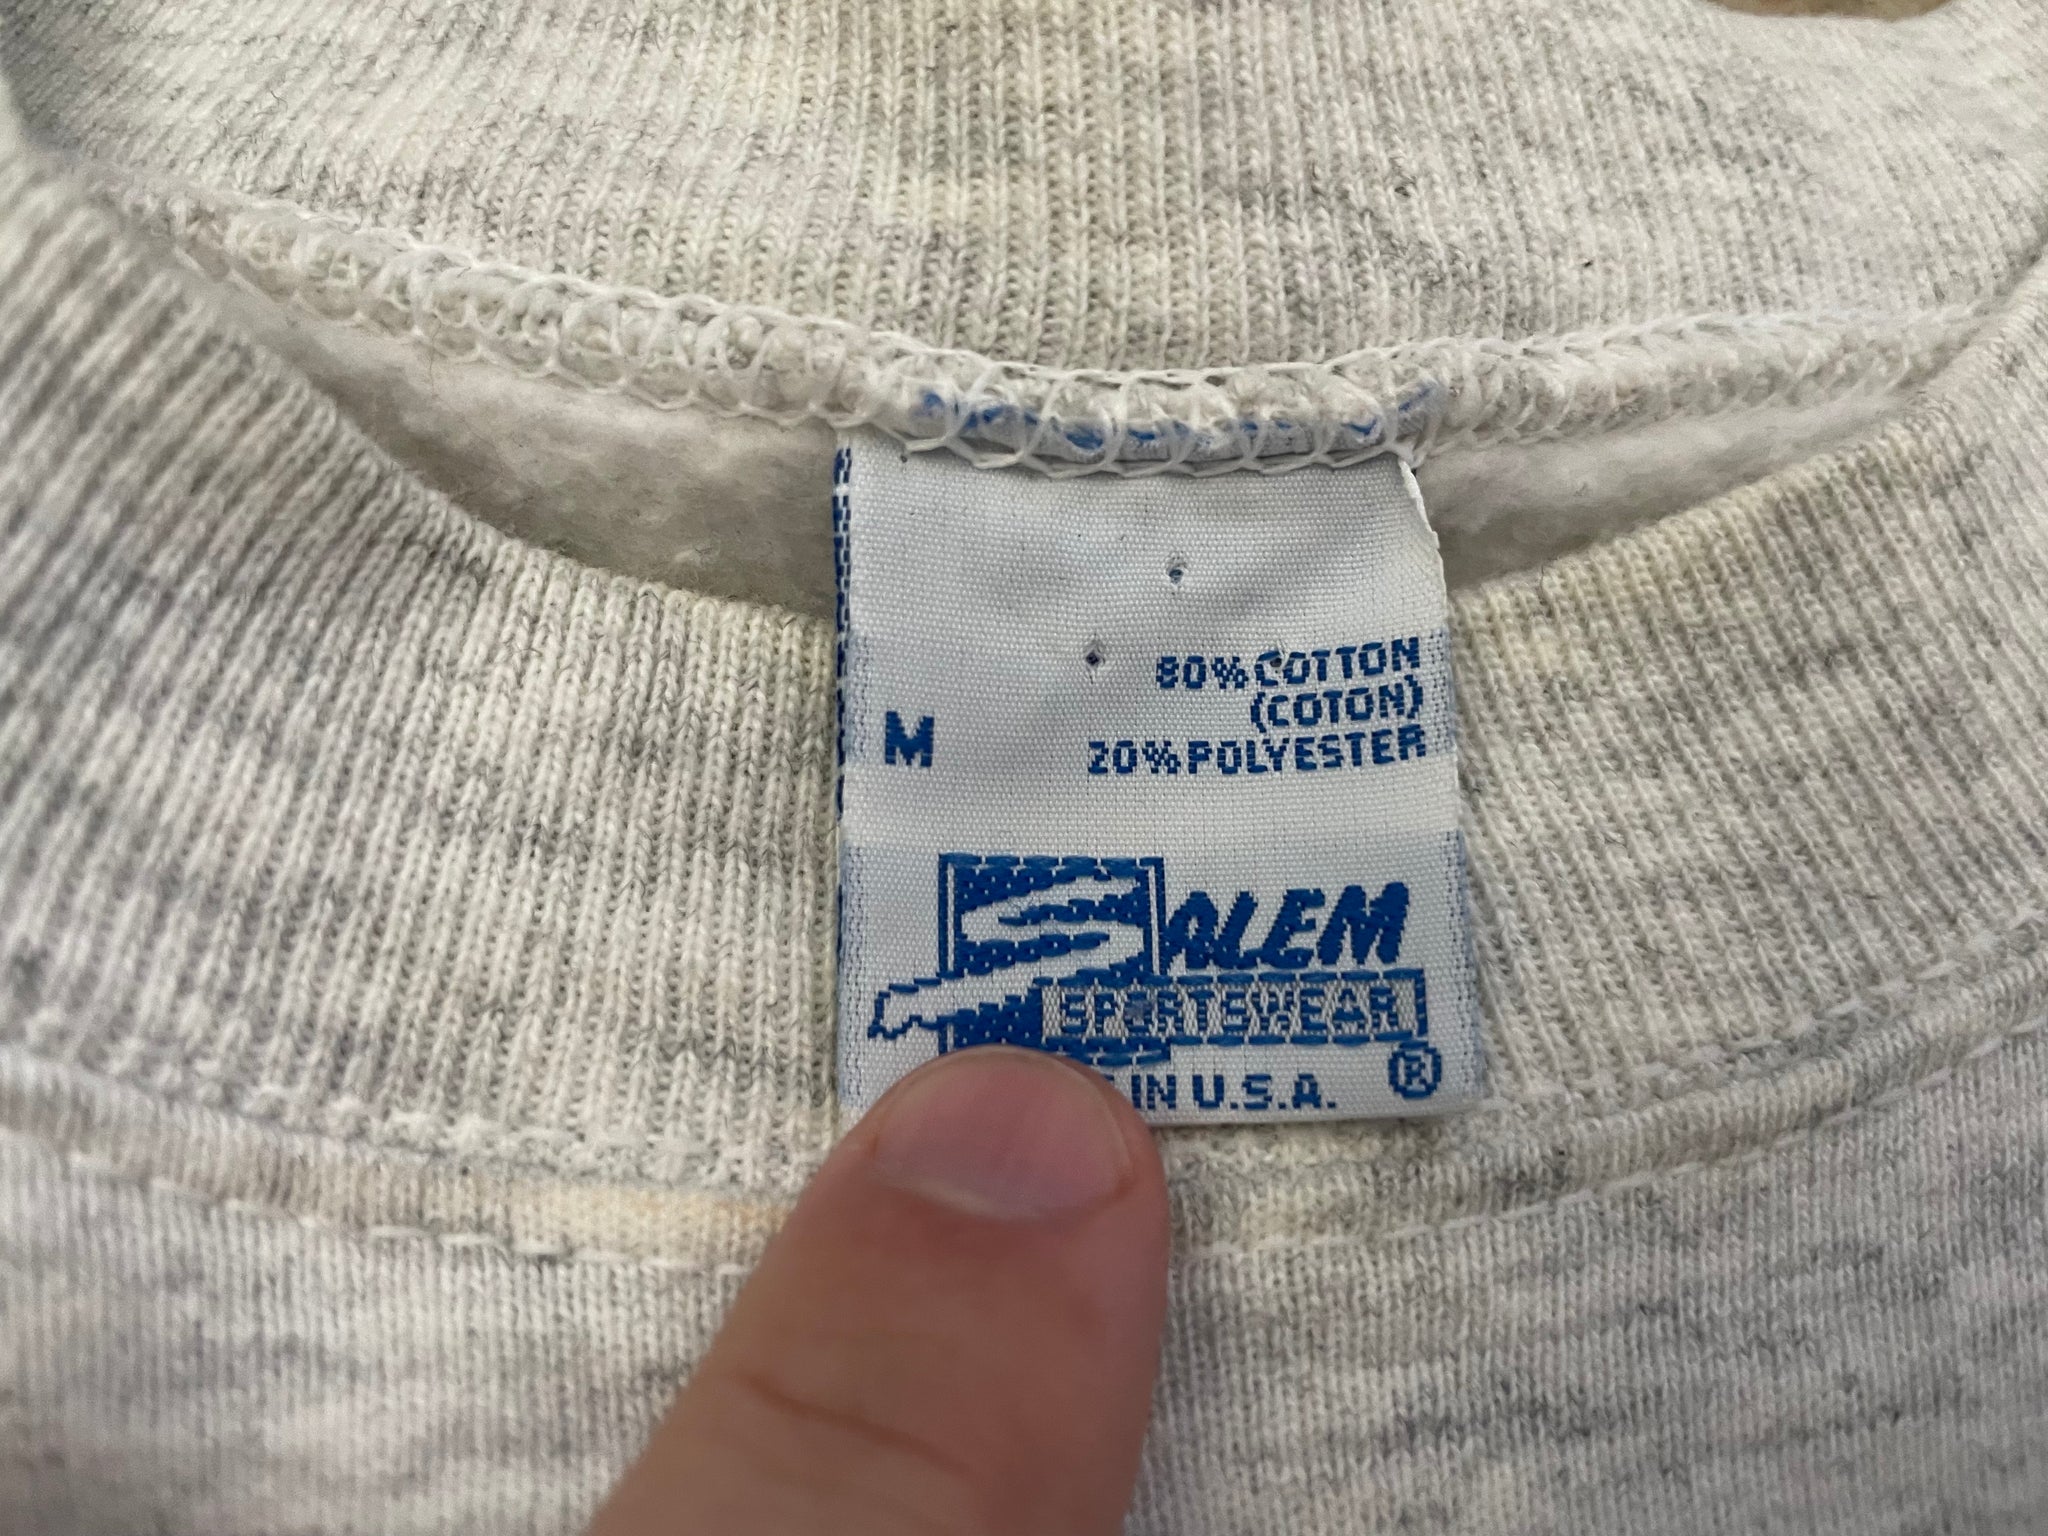 Vintage 1995 Los Angeles Dodgers Hideo Nomo Salem Sportswear T-Shirt Sz.XL  / Sole Food SF